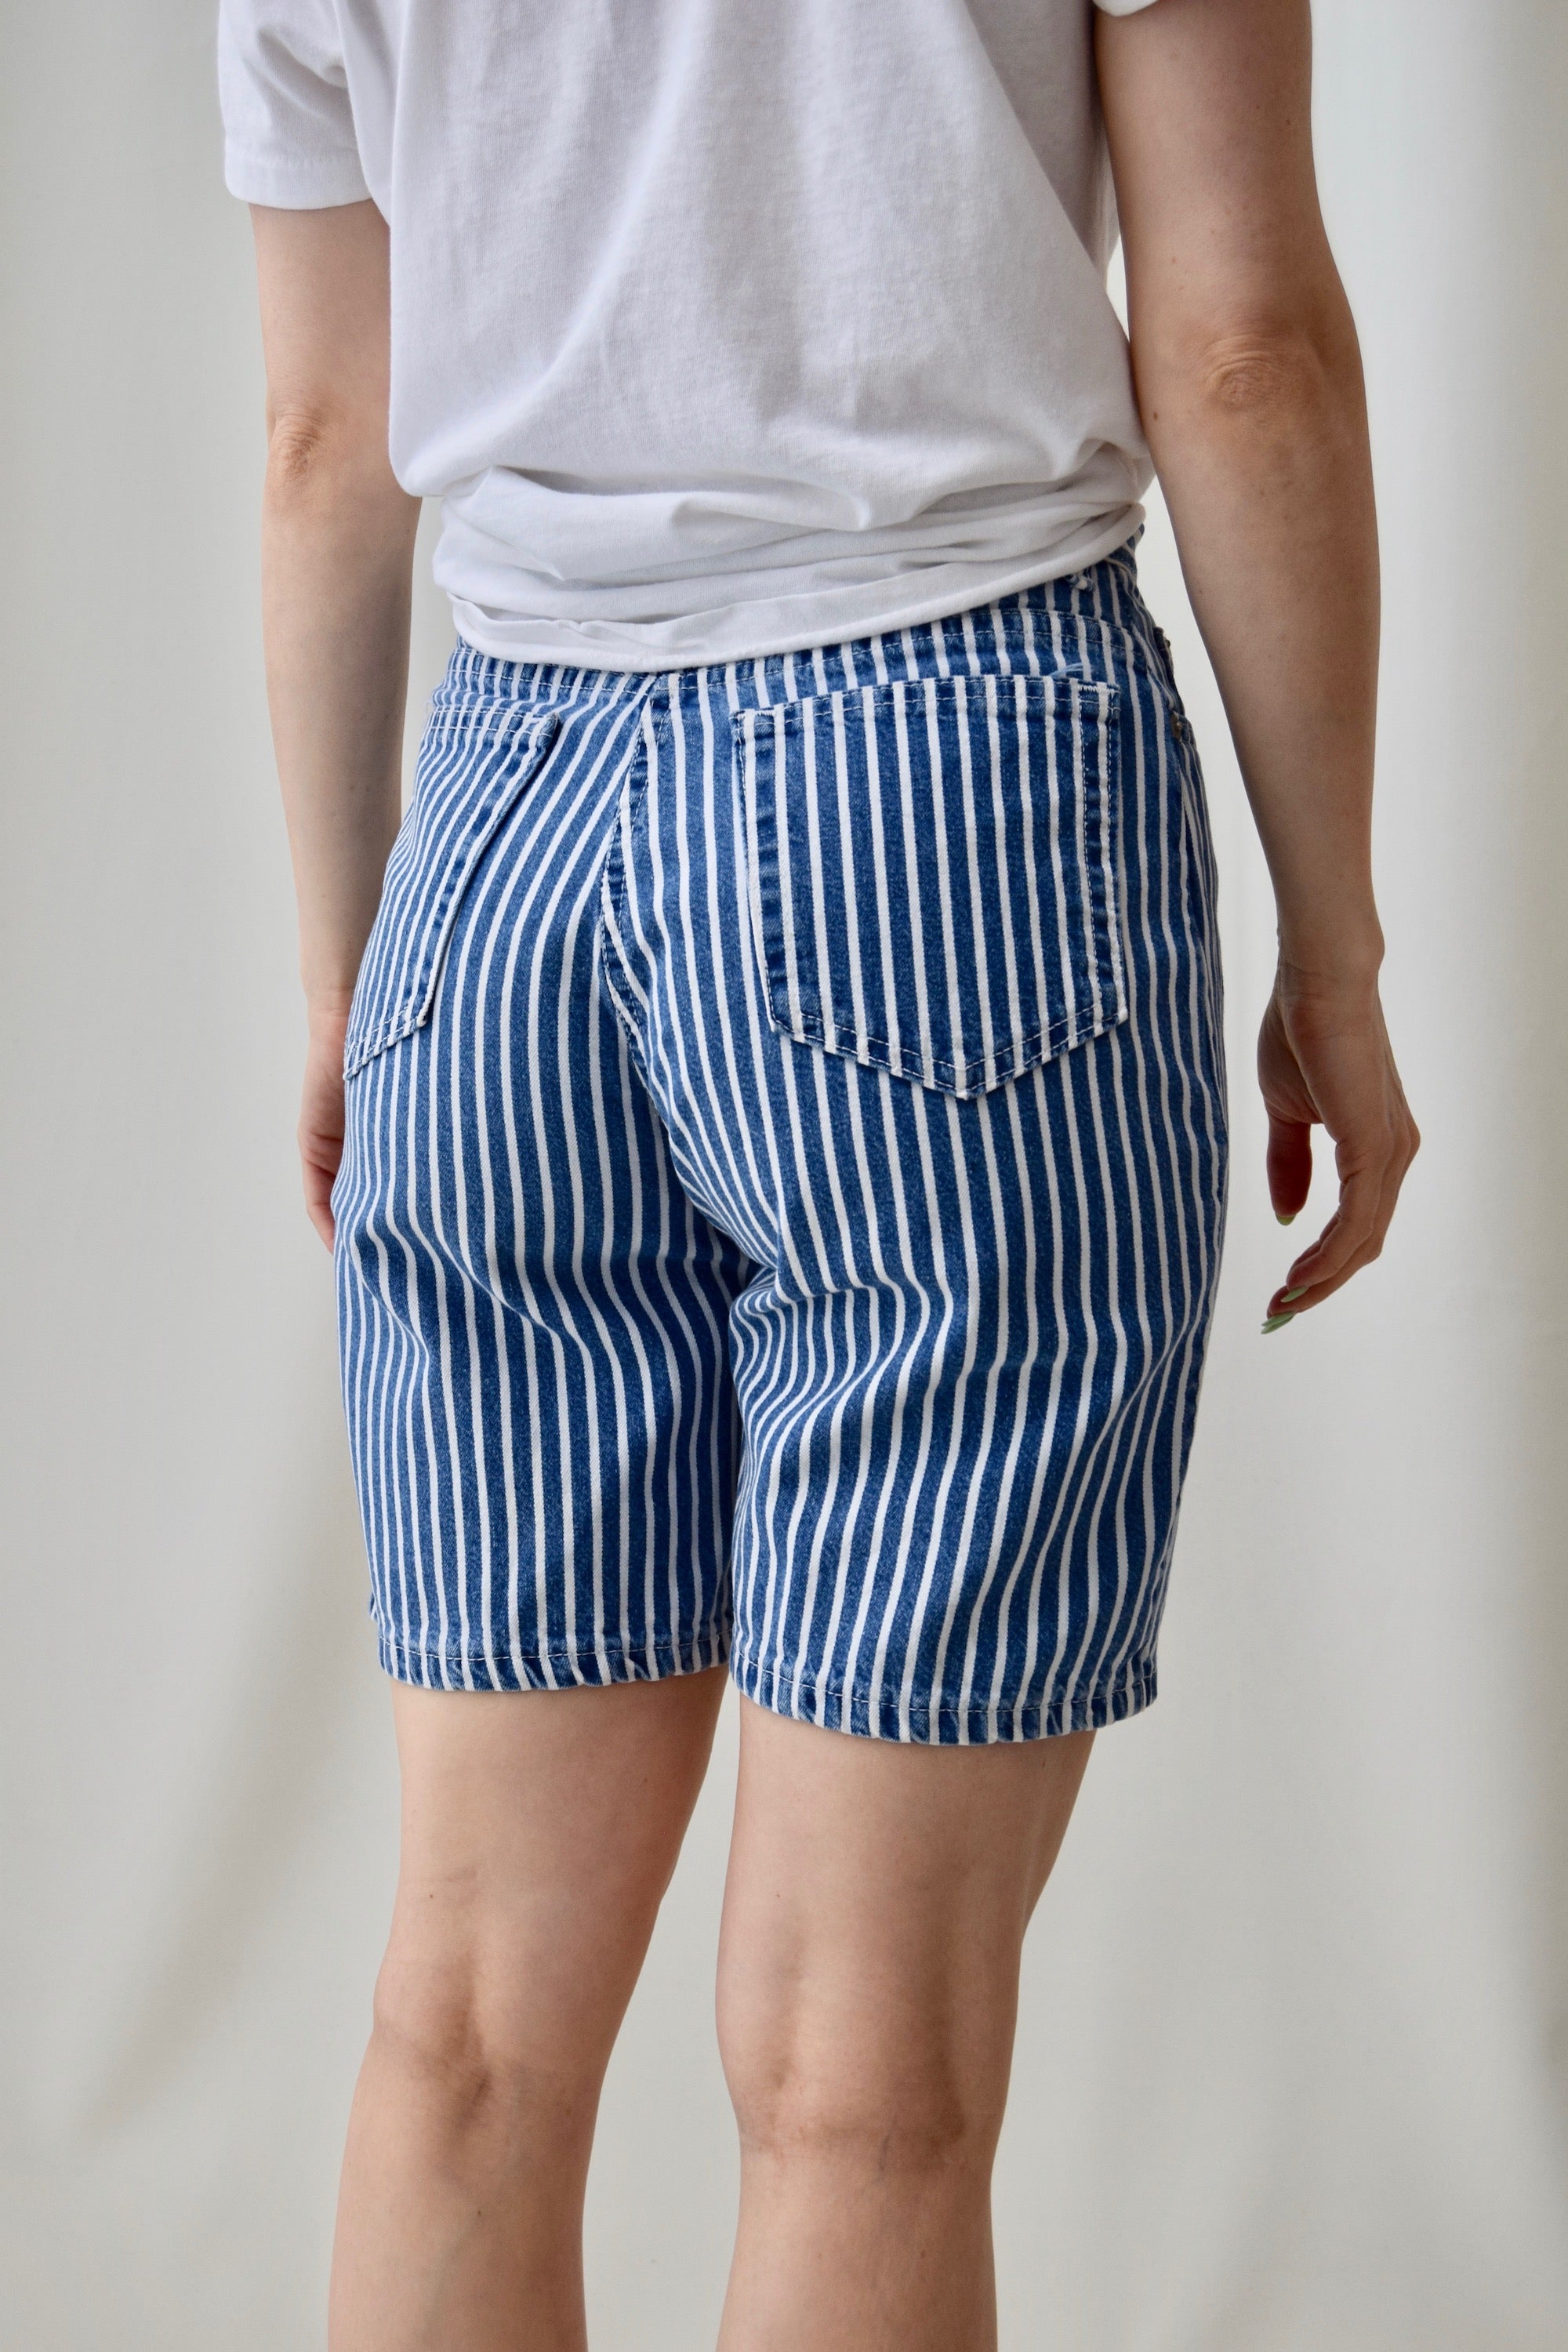 Hickory Striped Bermuda Shorts